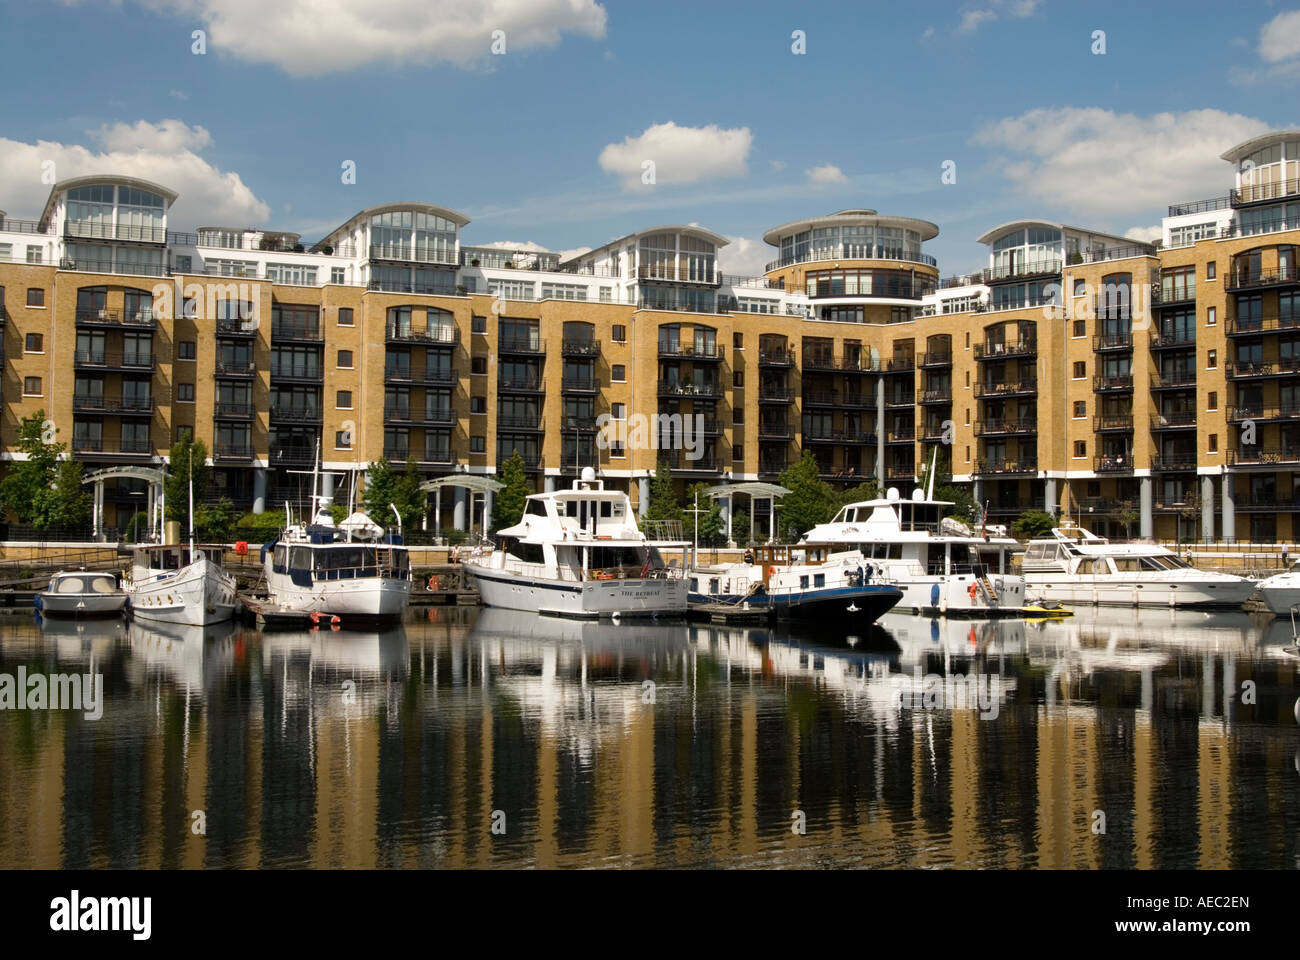 Yachts and apartments at St Katherine's Dock London England UK Stock Photo